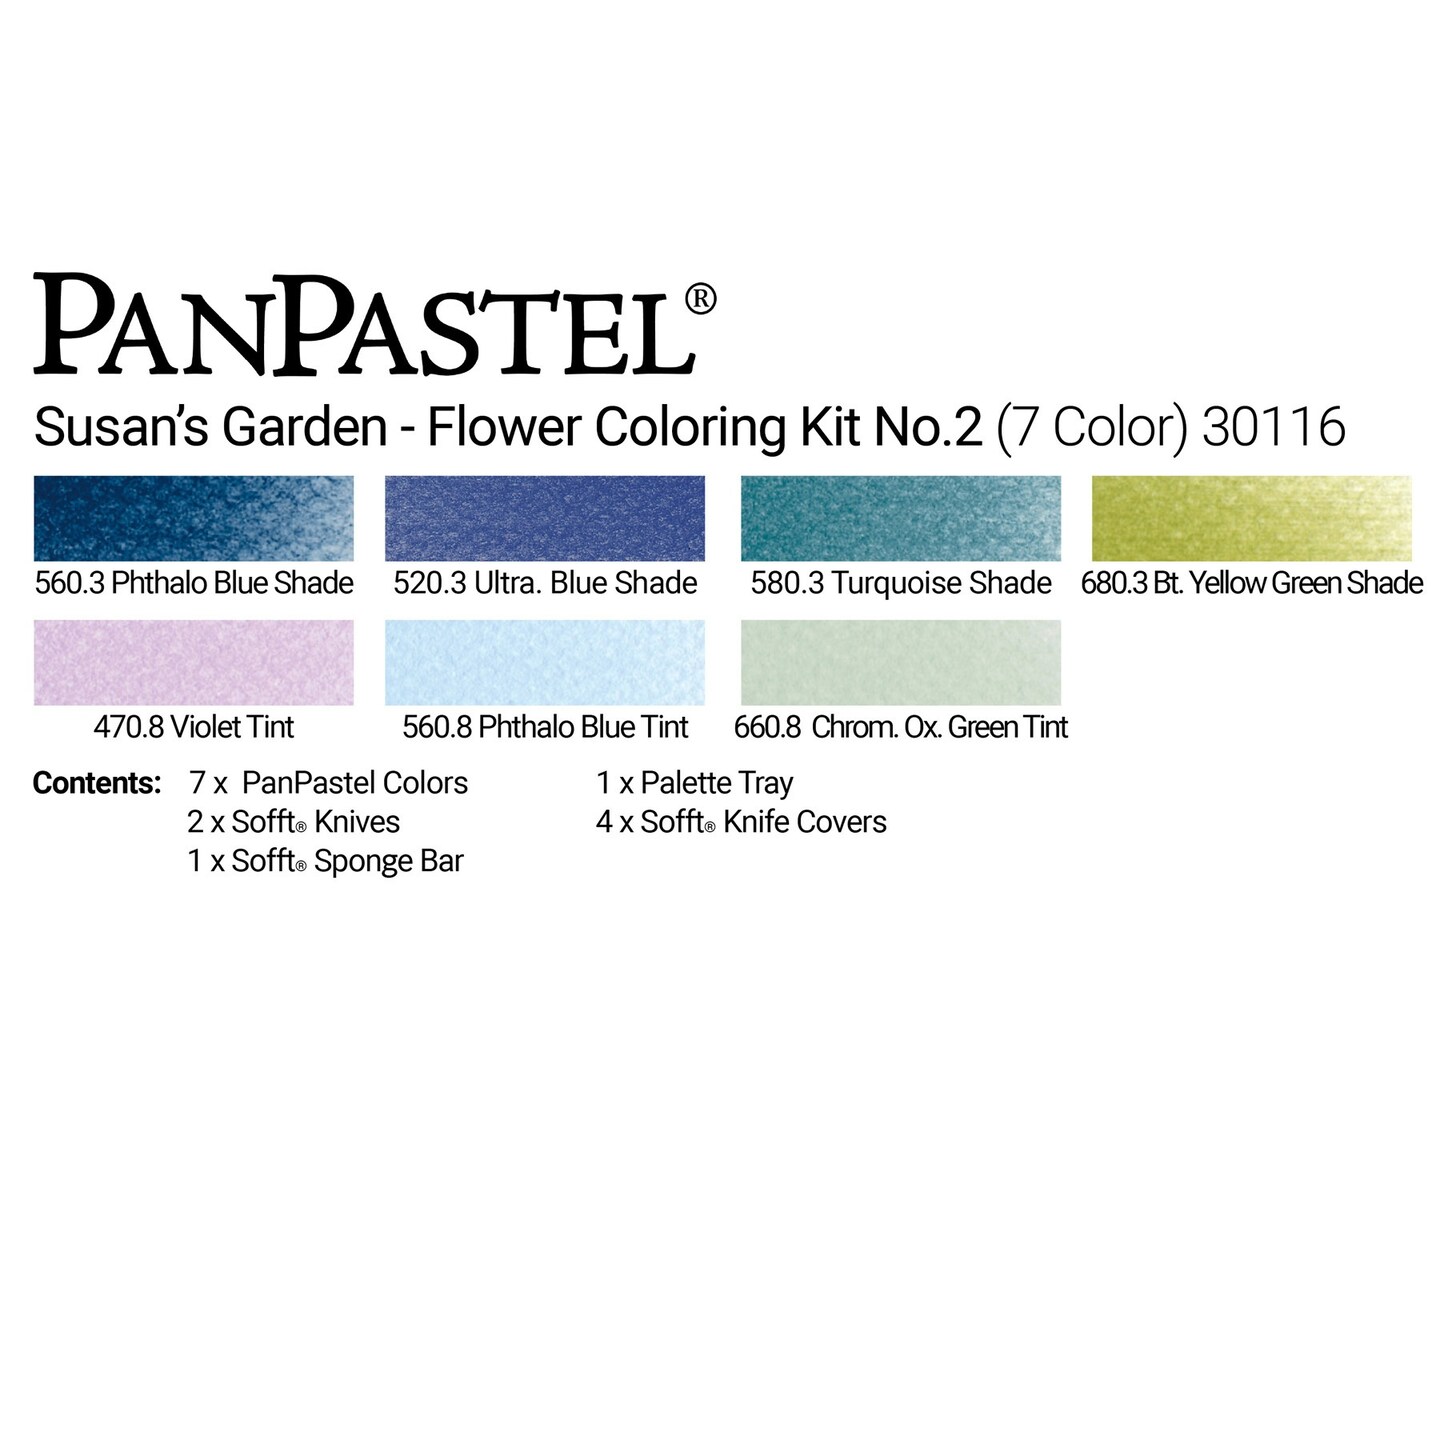 Panpastel Ultra Soft Artist Pastel Set 9ml 7-pkg-flower Coloring #2 - Susan's Garden